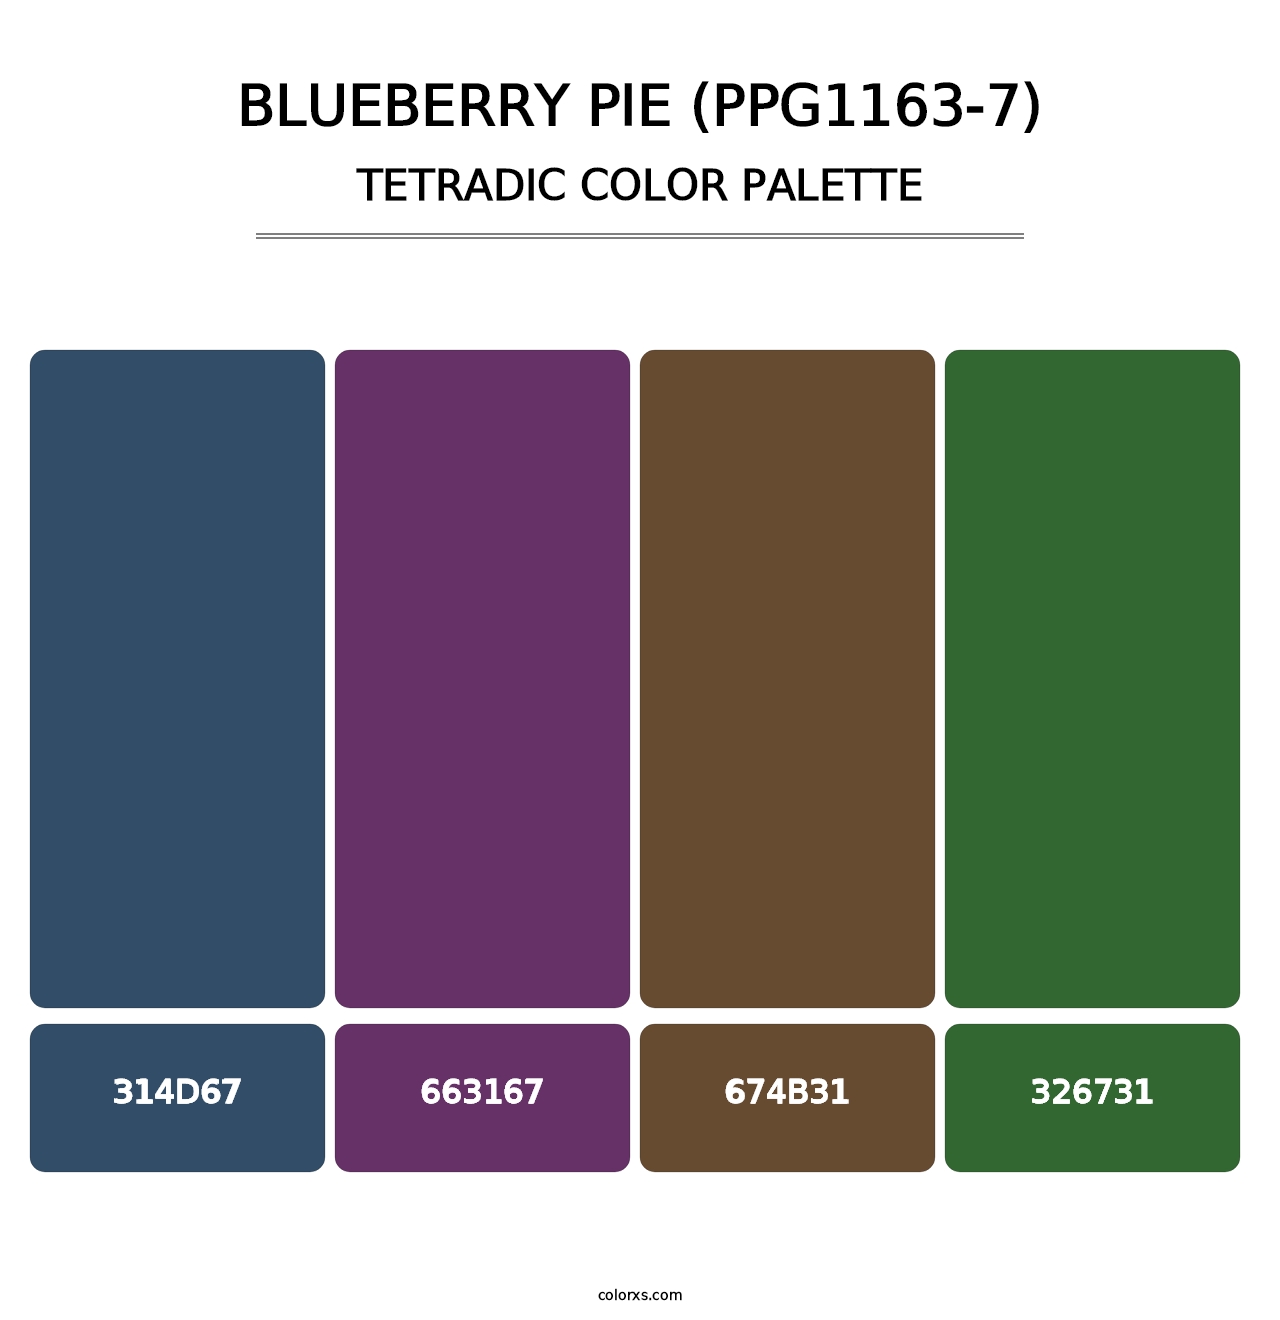 Blueberry Pie (PPG1163-7) - Tetradic Color Palette